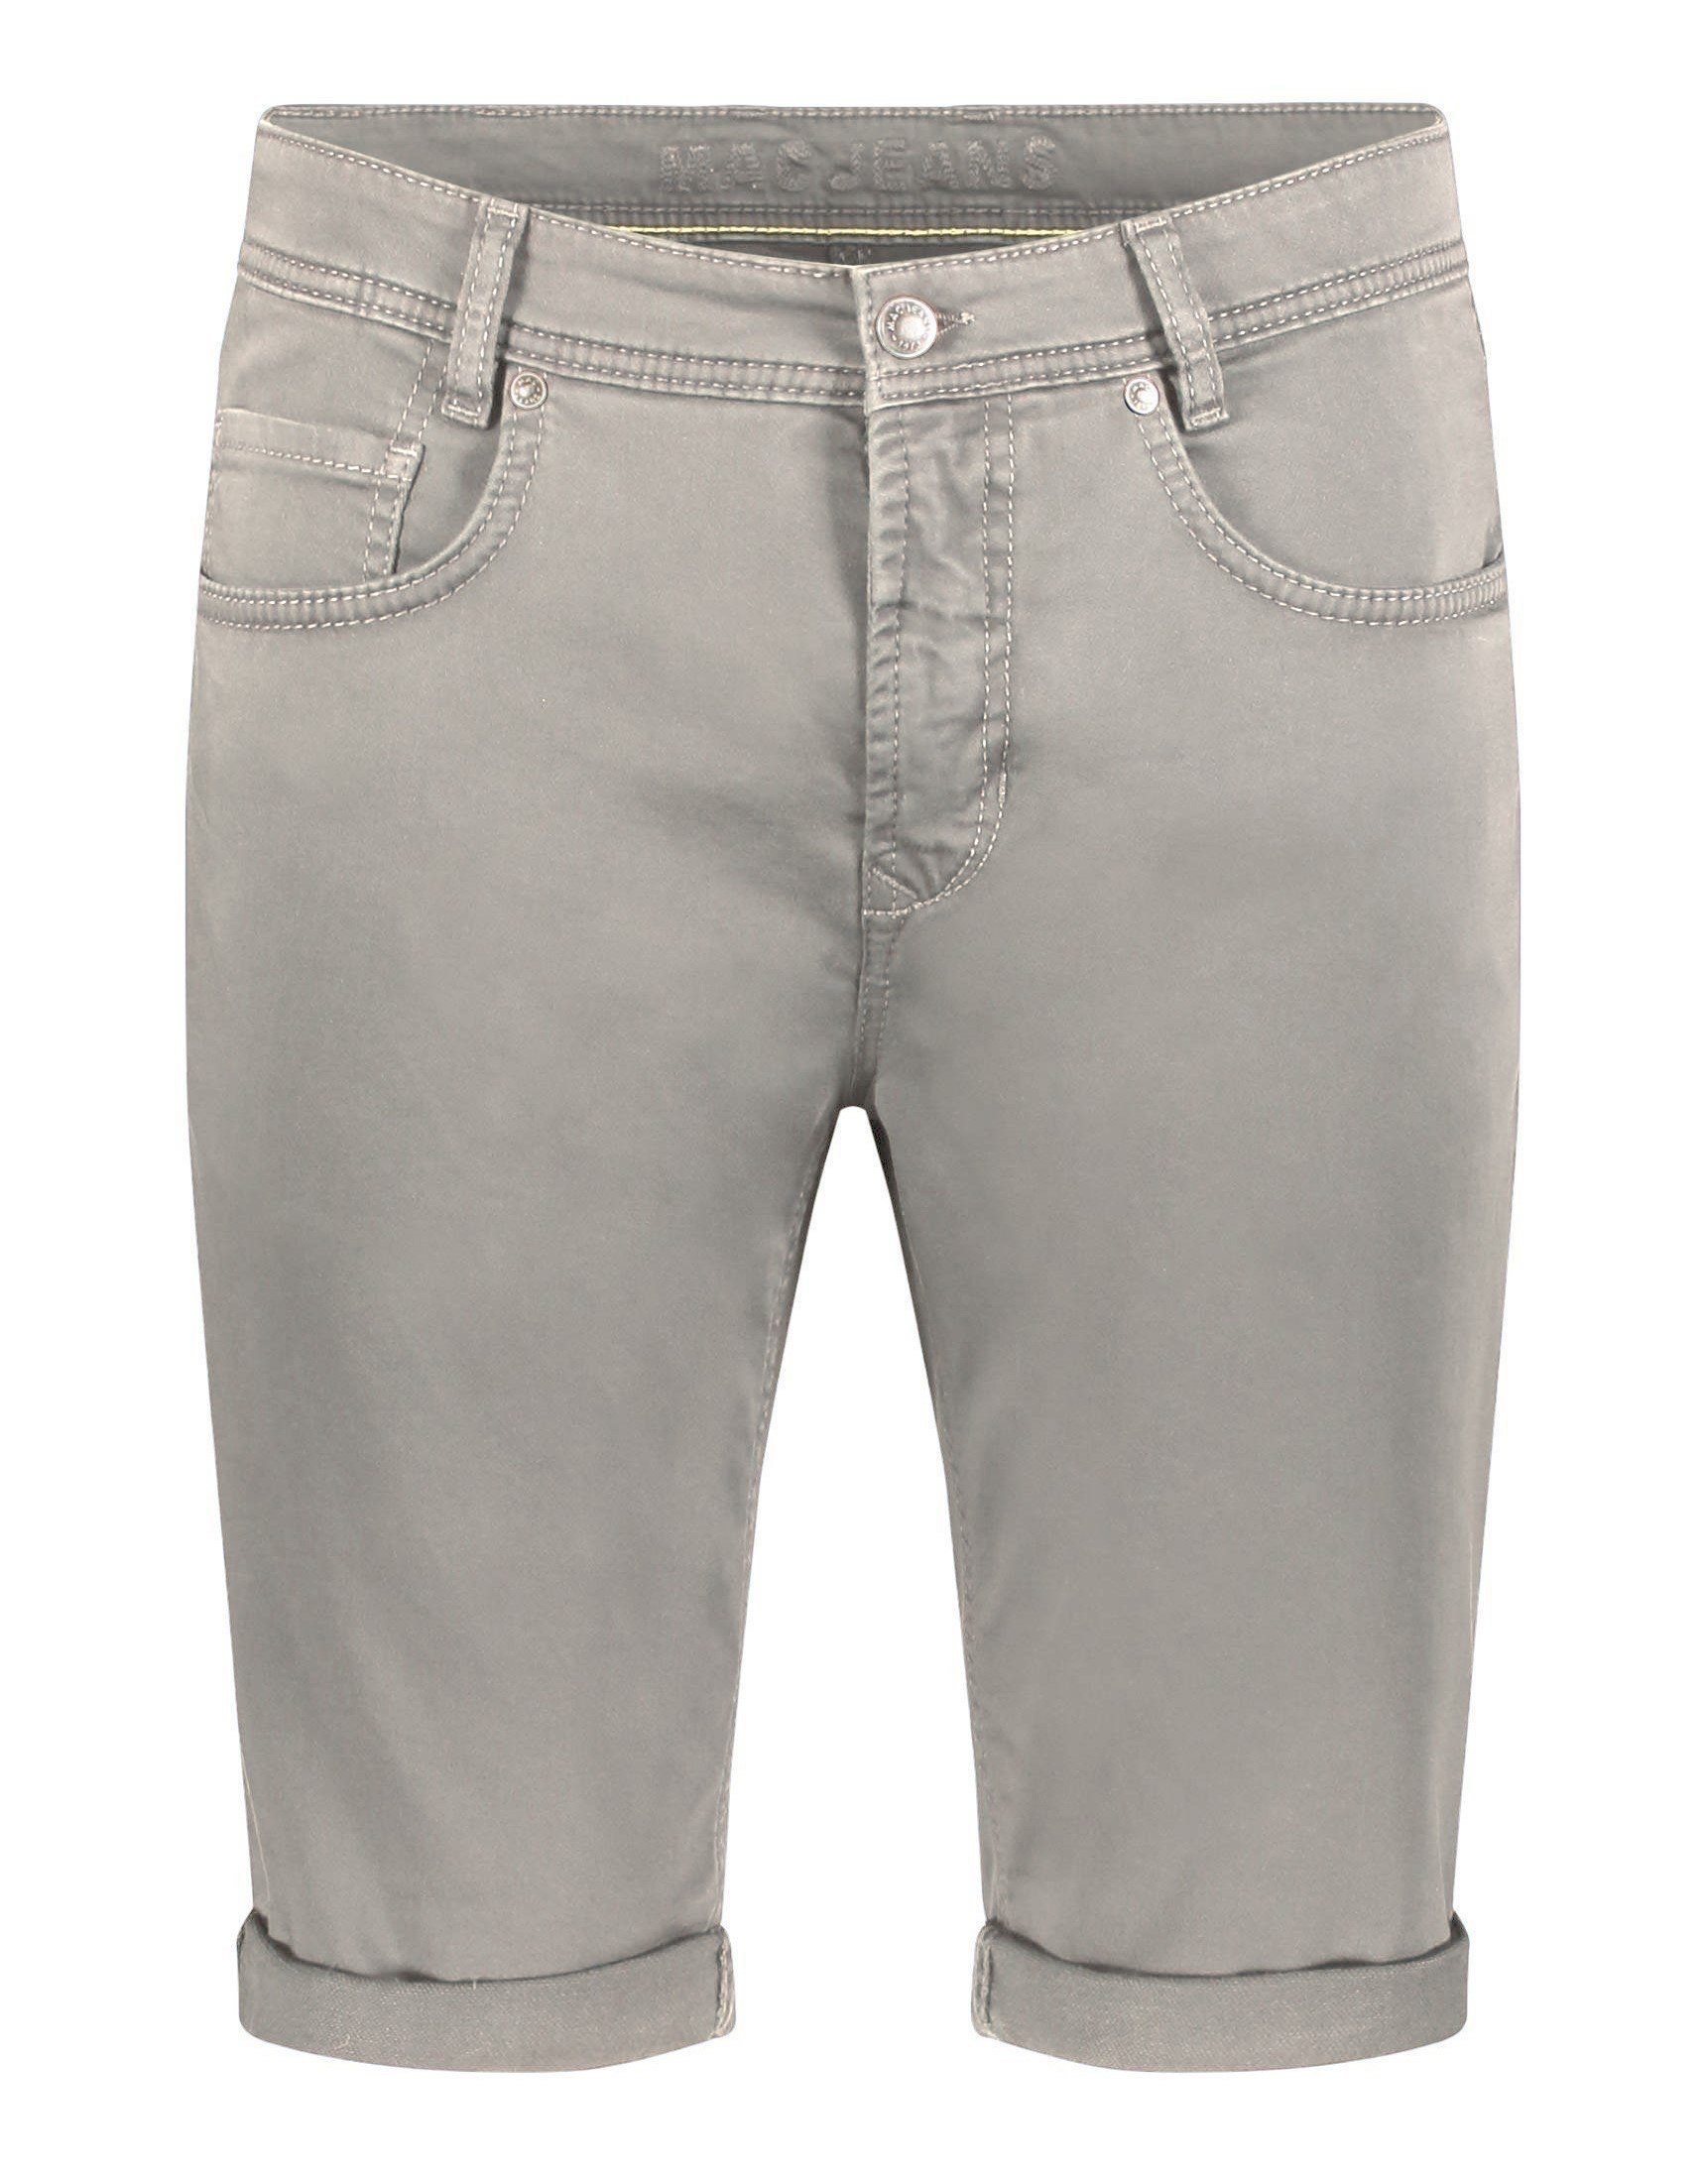 MAC 5-Pocket-Jeans MAC 0562-00-0715 grey ash PPT JOG'N LIGHT 053R